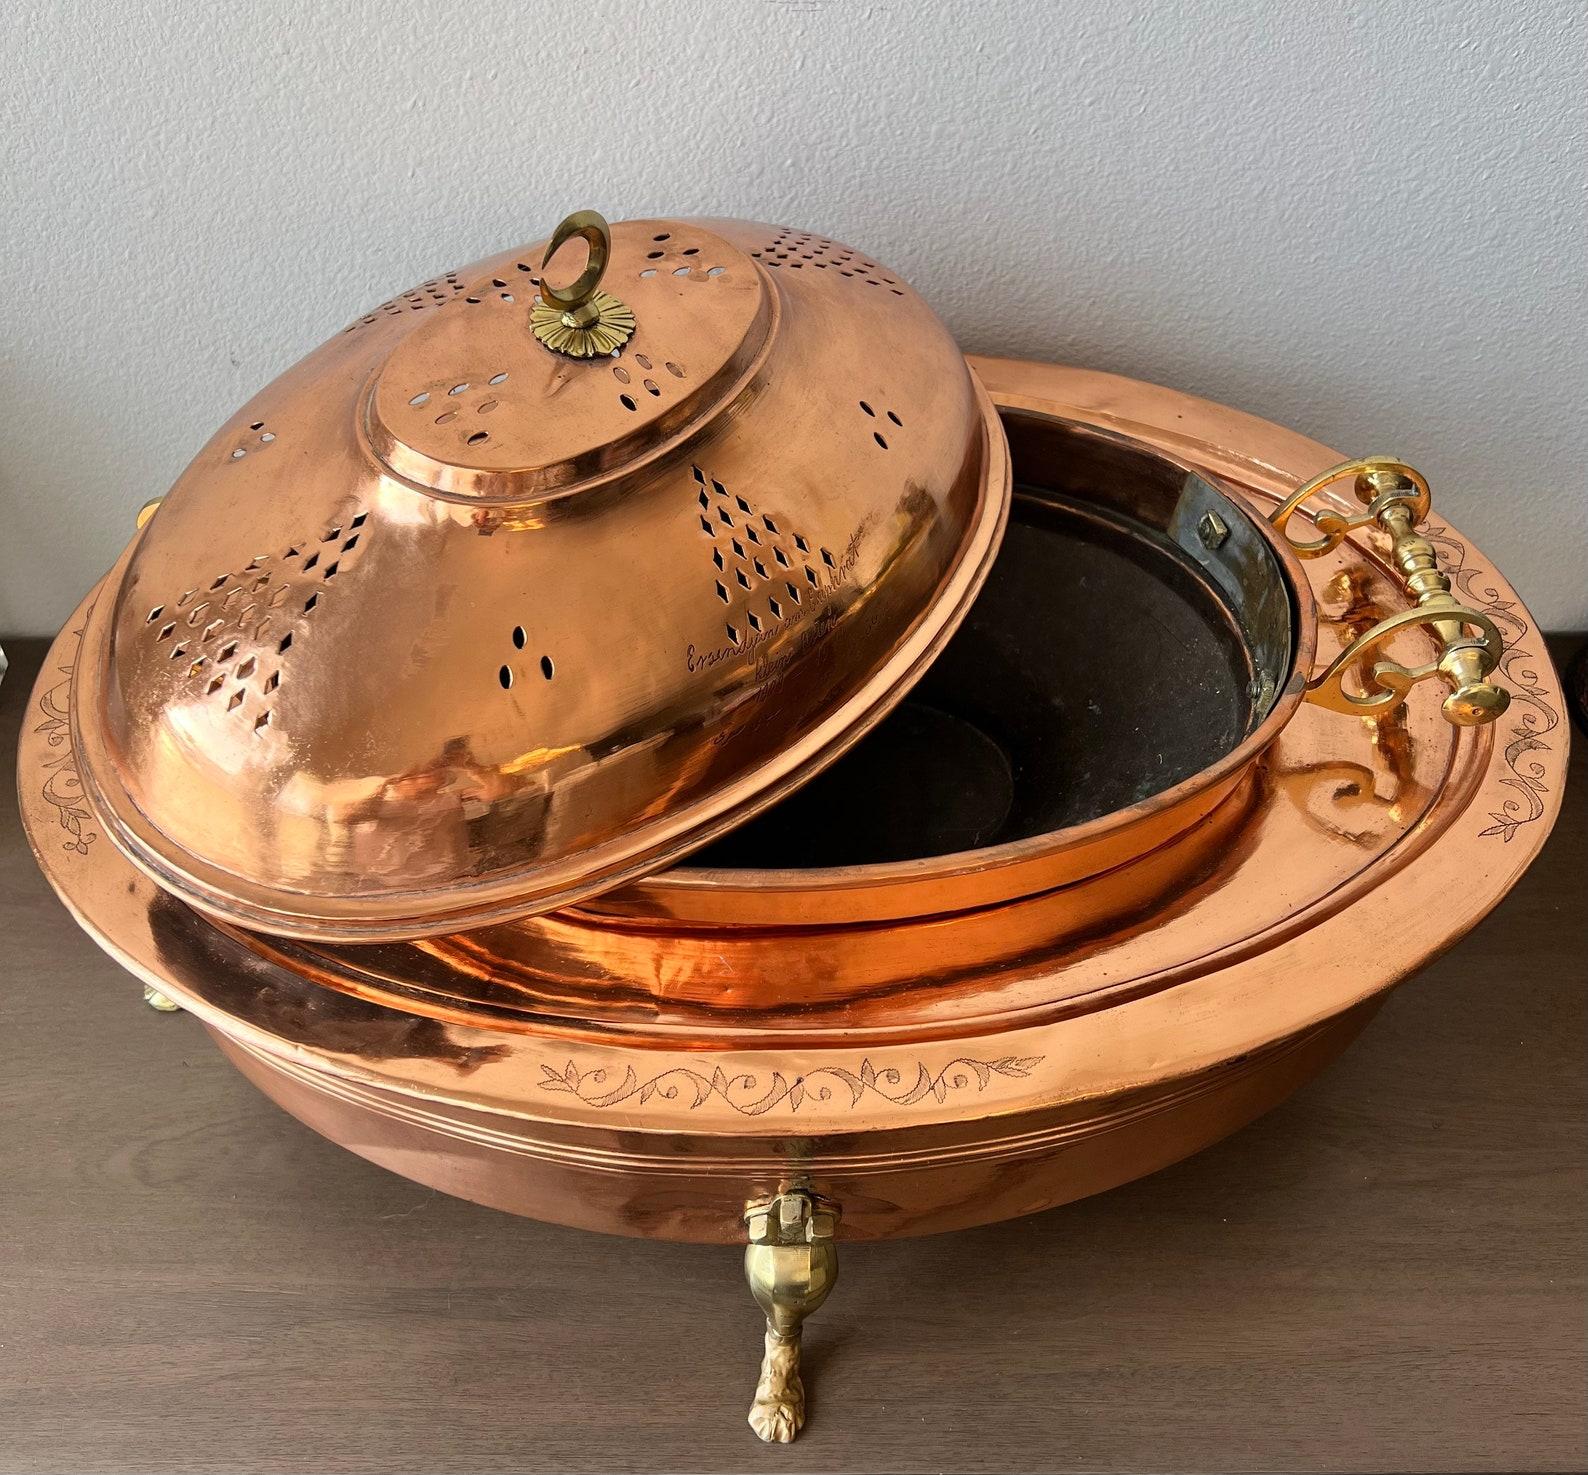 copper chafing dish pakistan